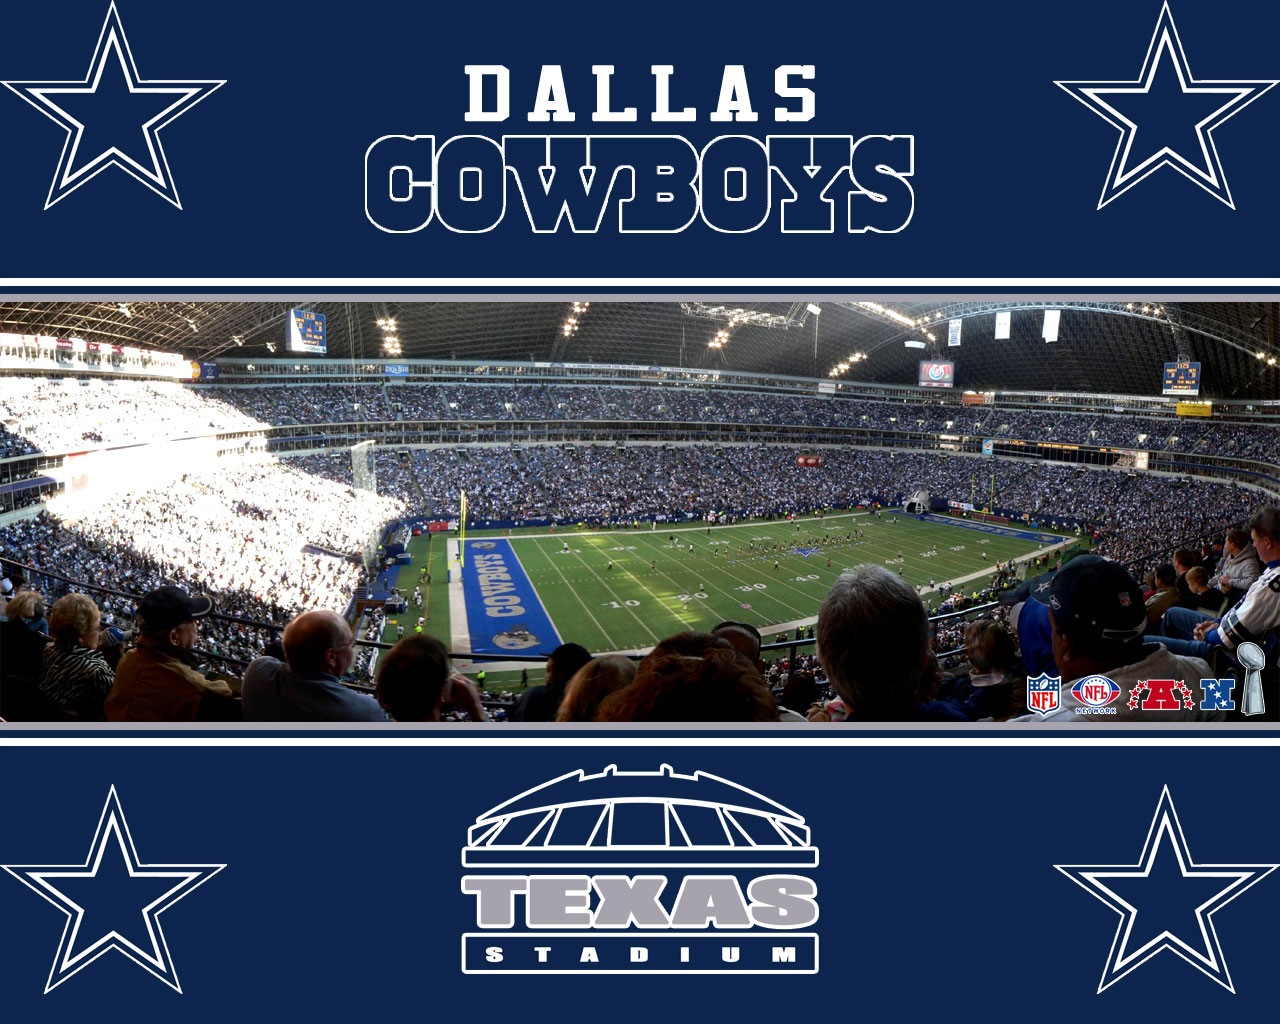 Dallas Cowboys High Resolution Wallpaper - WallpaperSafari